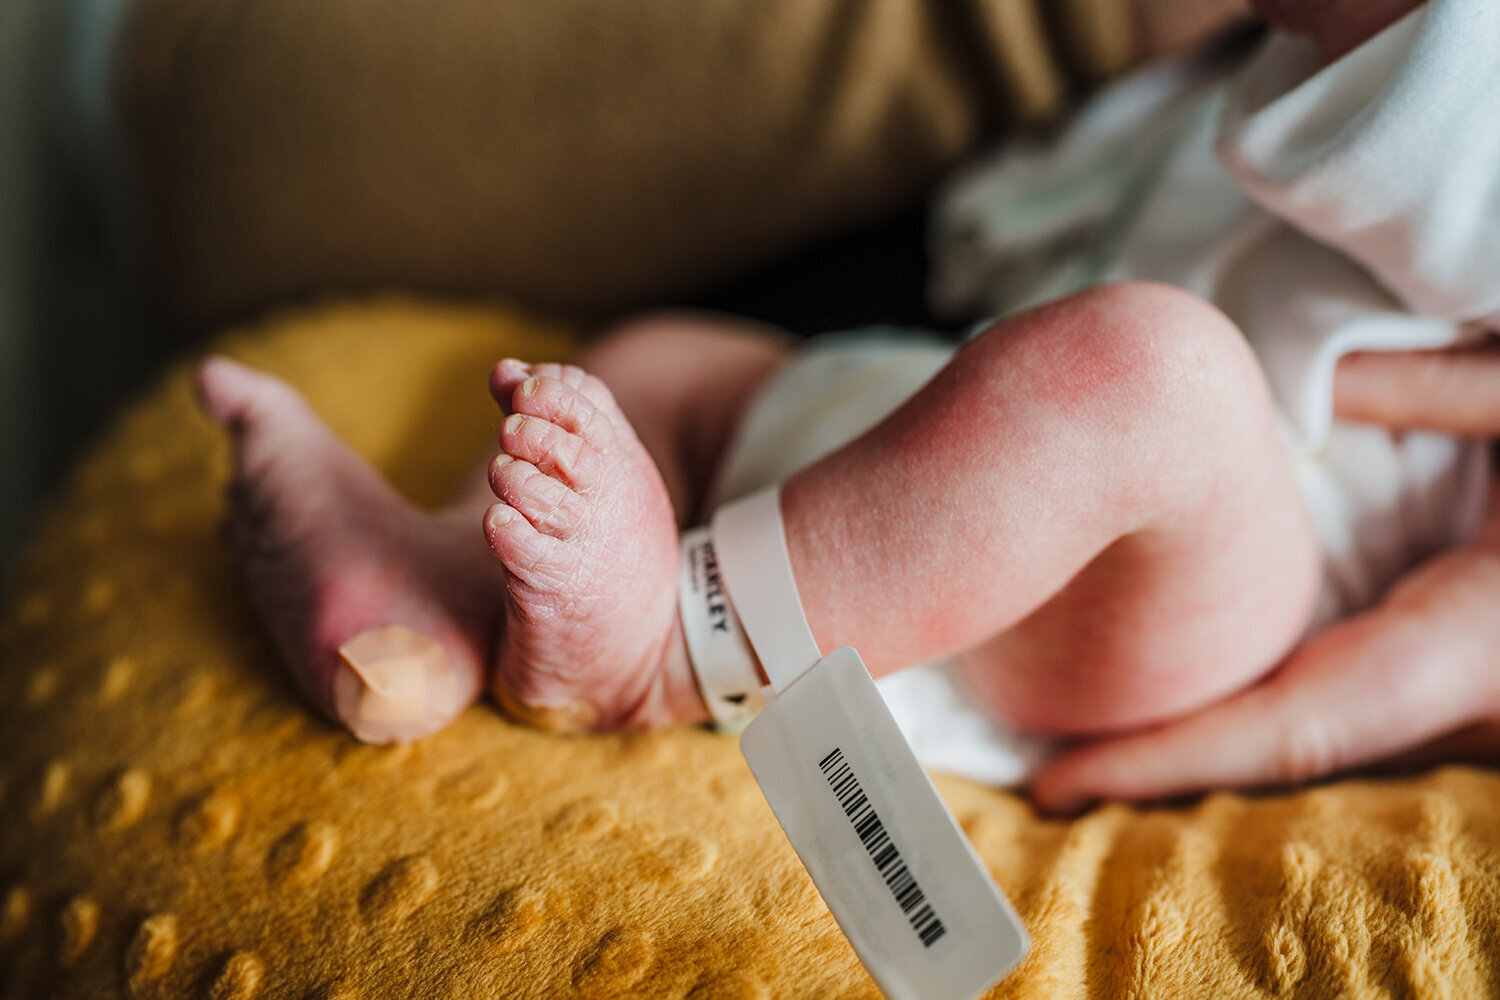 newborn baby feet wrinkled with hospital bracelets on ankles